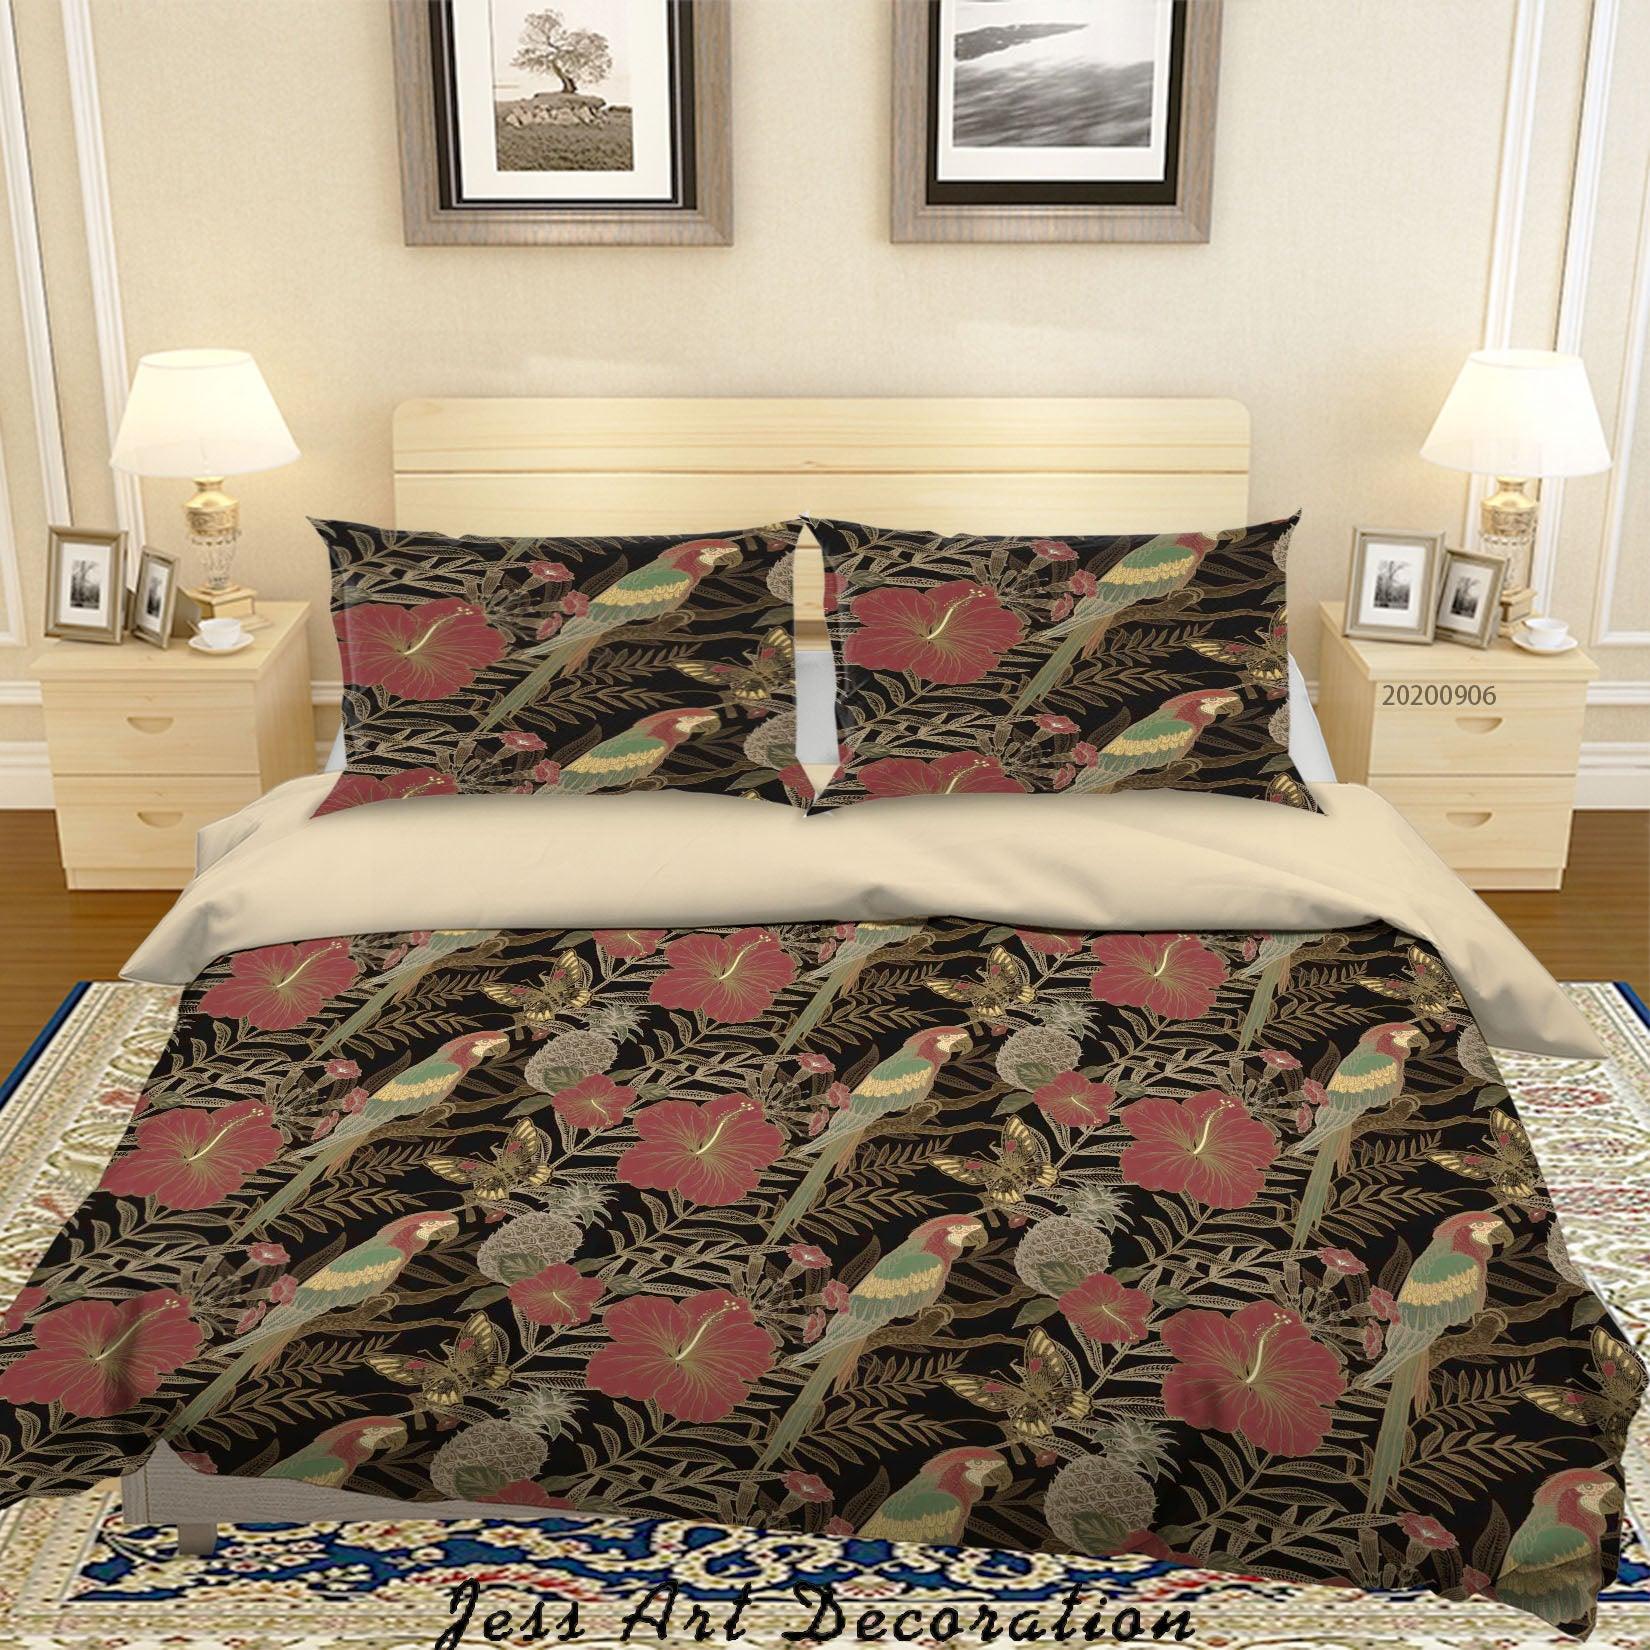 3D Vintage Leaves Bird Red Floral Pattern Quilt Cover Set Bedding Set Duvet Cover Pillowcases WJ 3649- Jess Art Decoration